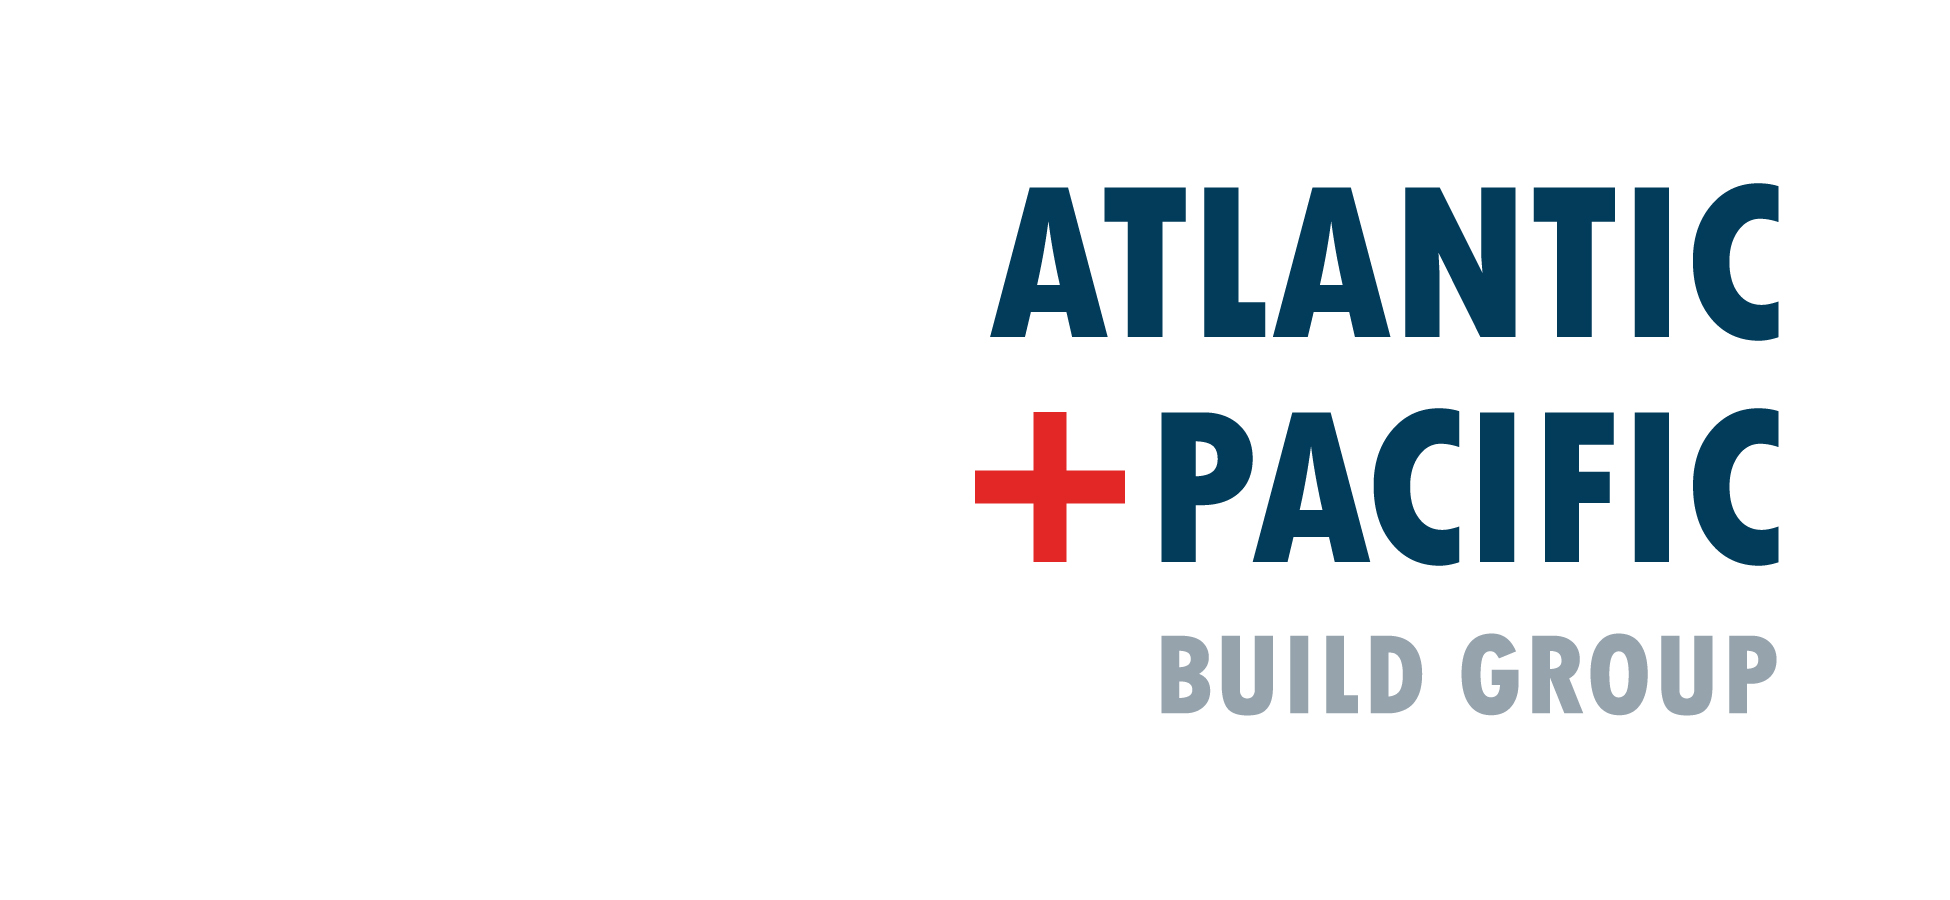 Atlantic & Pacific Build Group logo